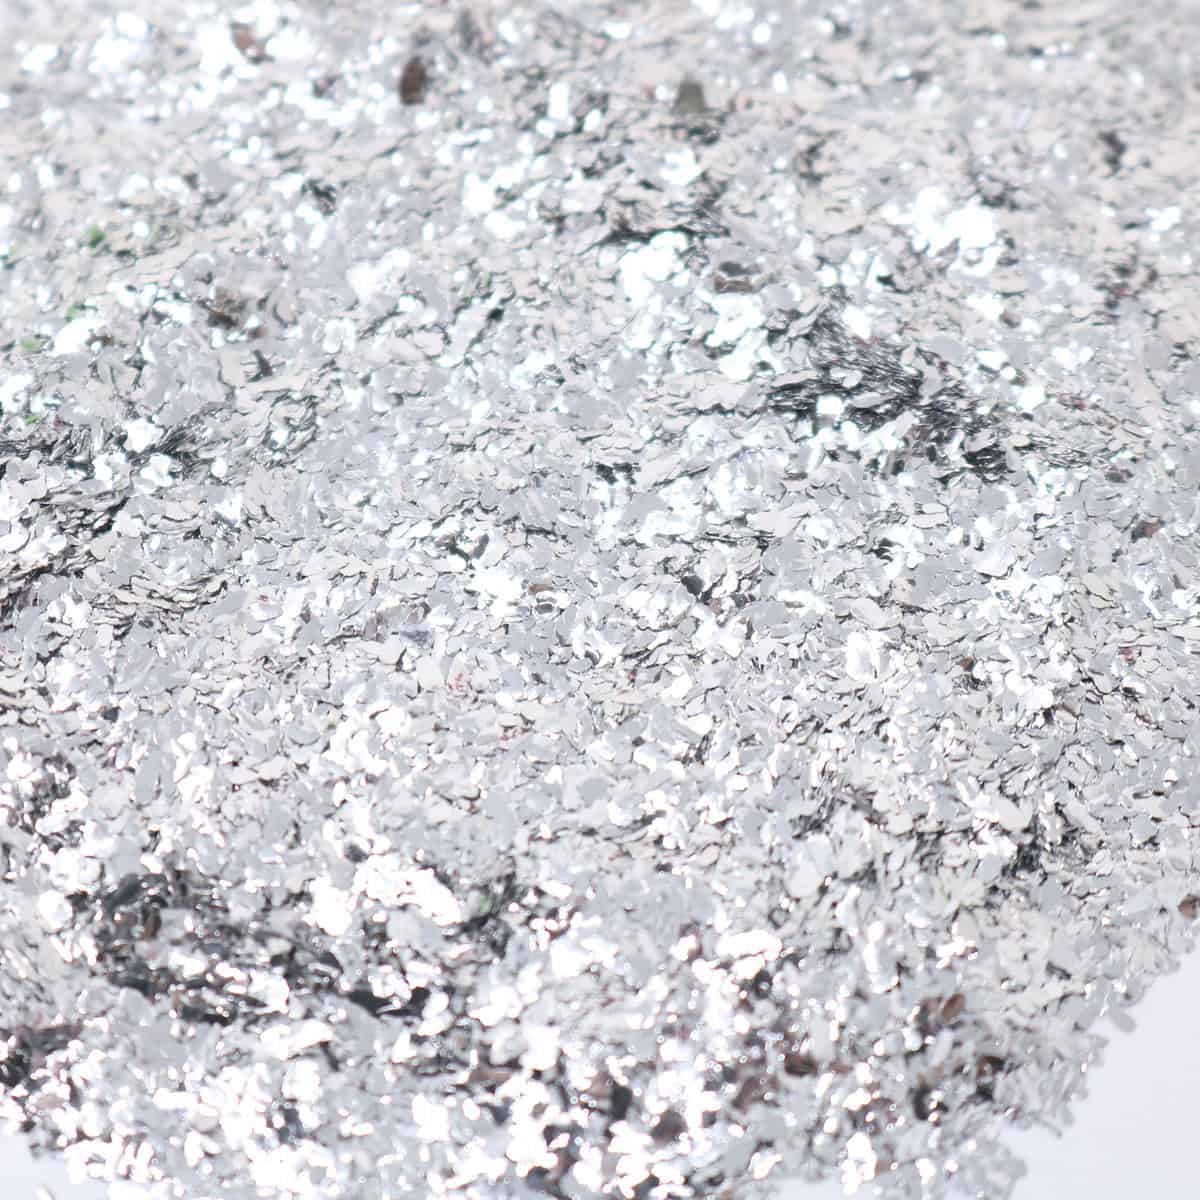 Silver metal glitter flakes